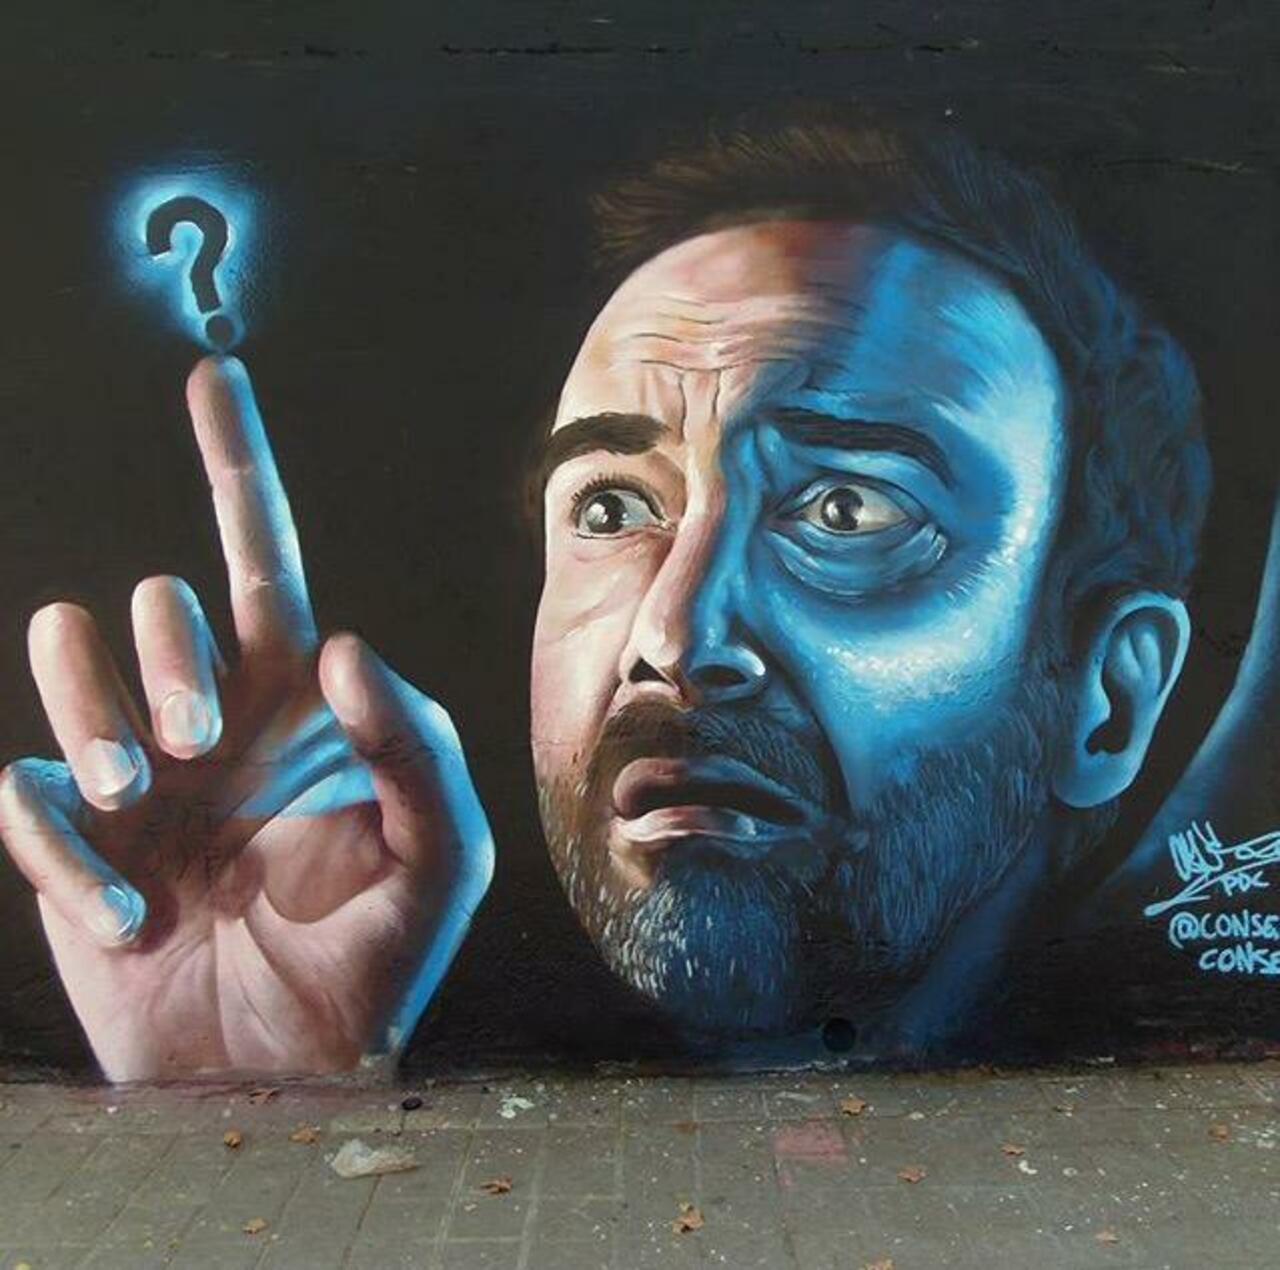 RT belilac "RT belilac "RT belilac "New Street Art by Conse

#art #graffiti #mural #streetart http://t.co/T2HZn9Etn9"""